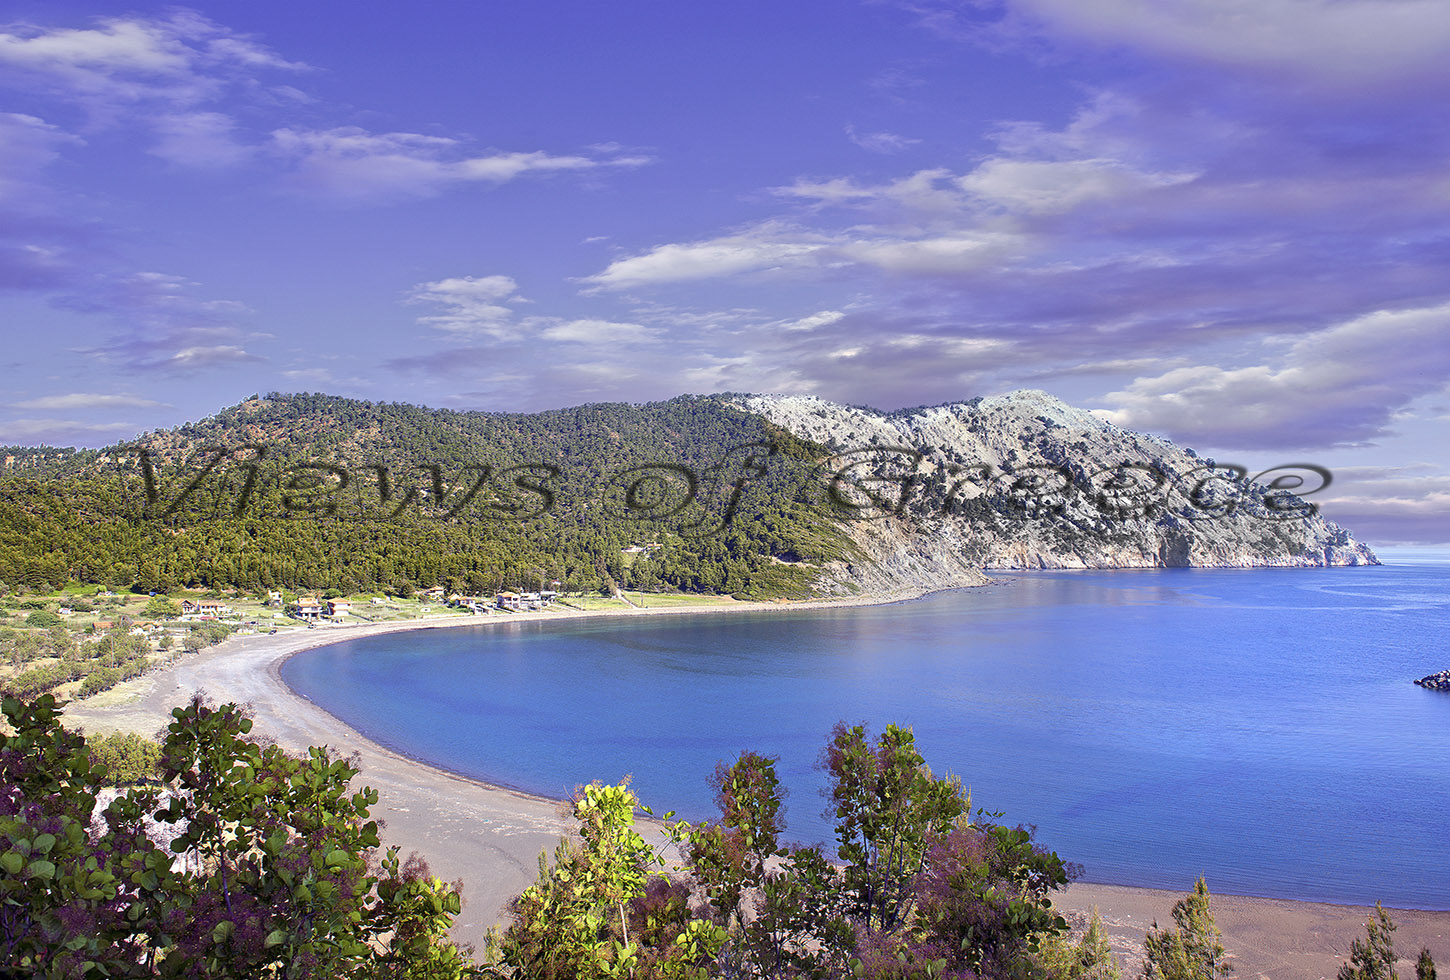 Euboea beach, παραλίες, μονοήμερη εκδρομή, Ανατολική Εύβοια, Αιγαίο